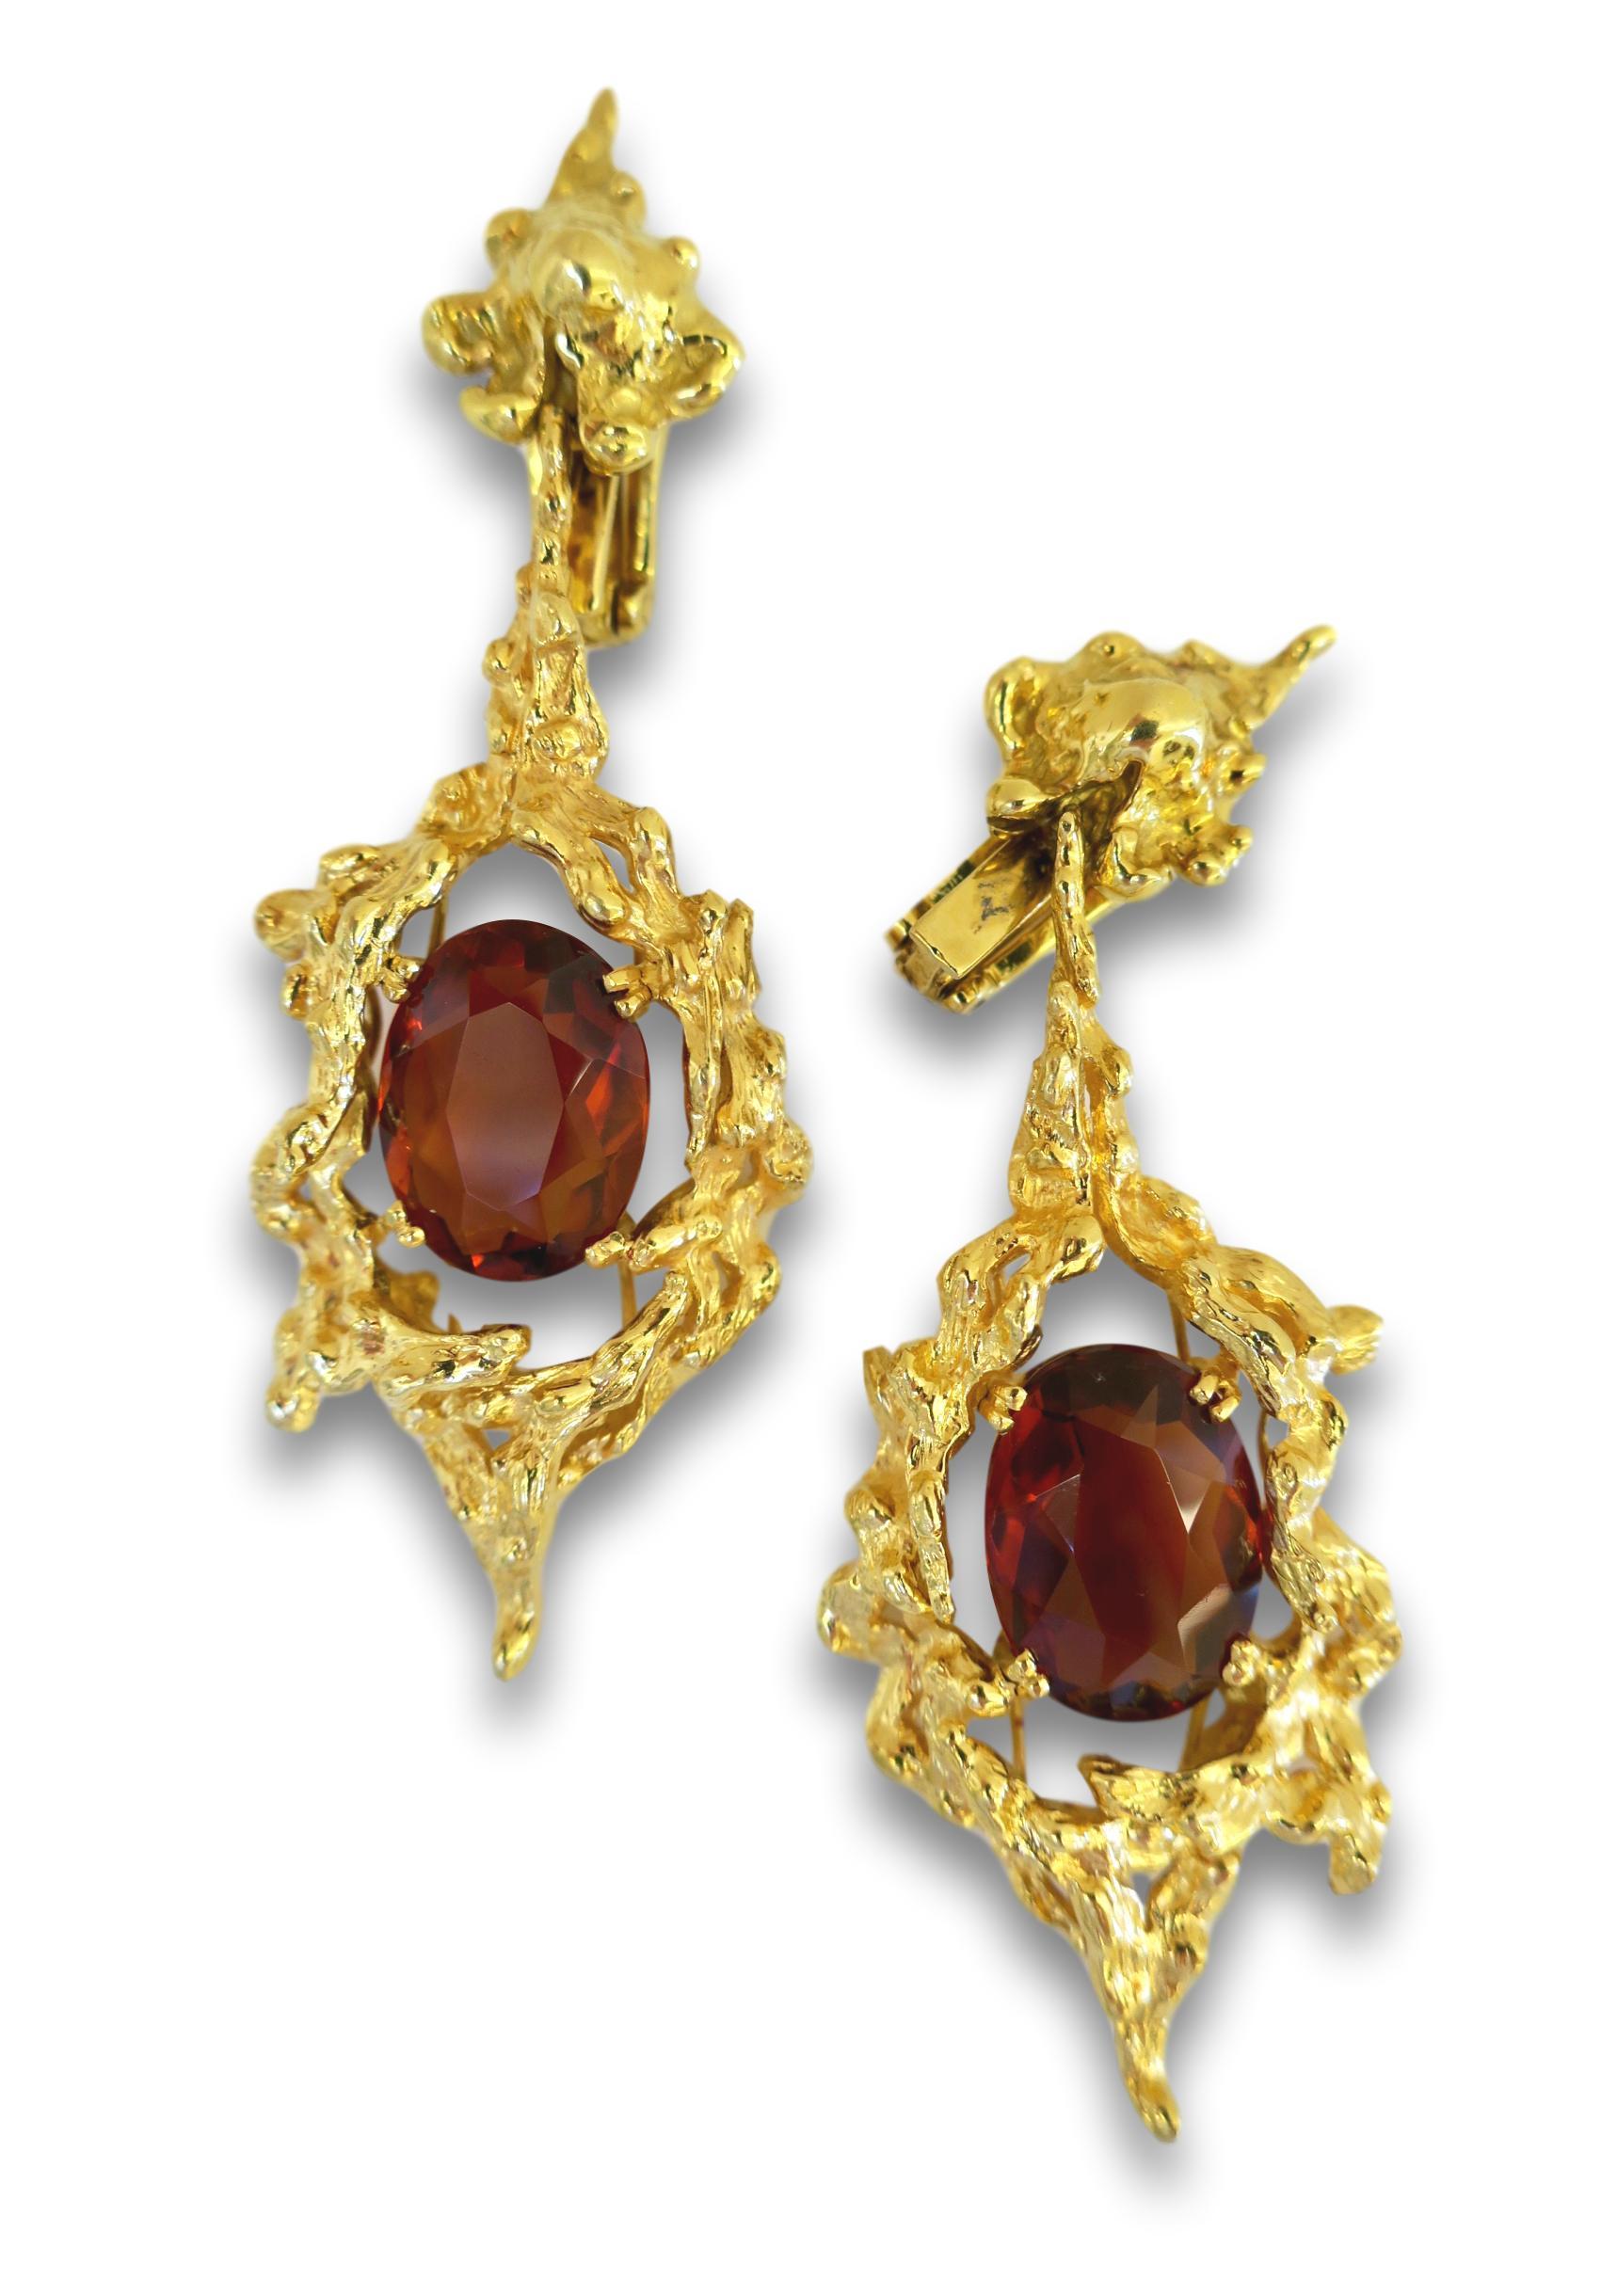 Hessonite garnet dangle earrings by H.Stern. The 2 1/2